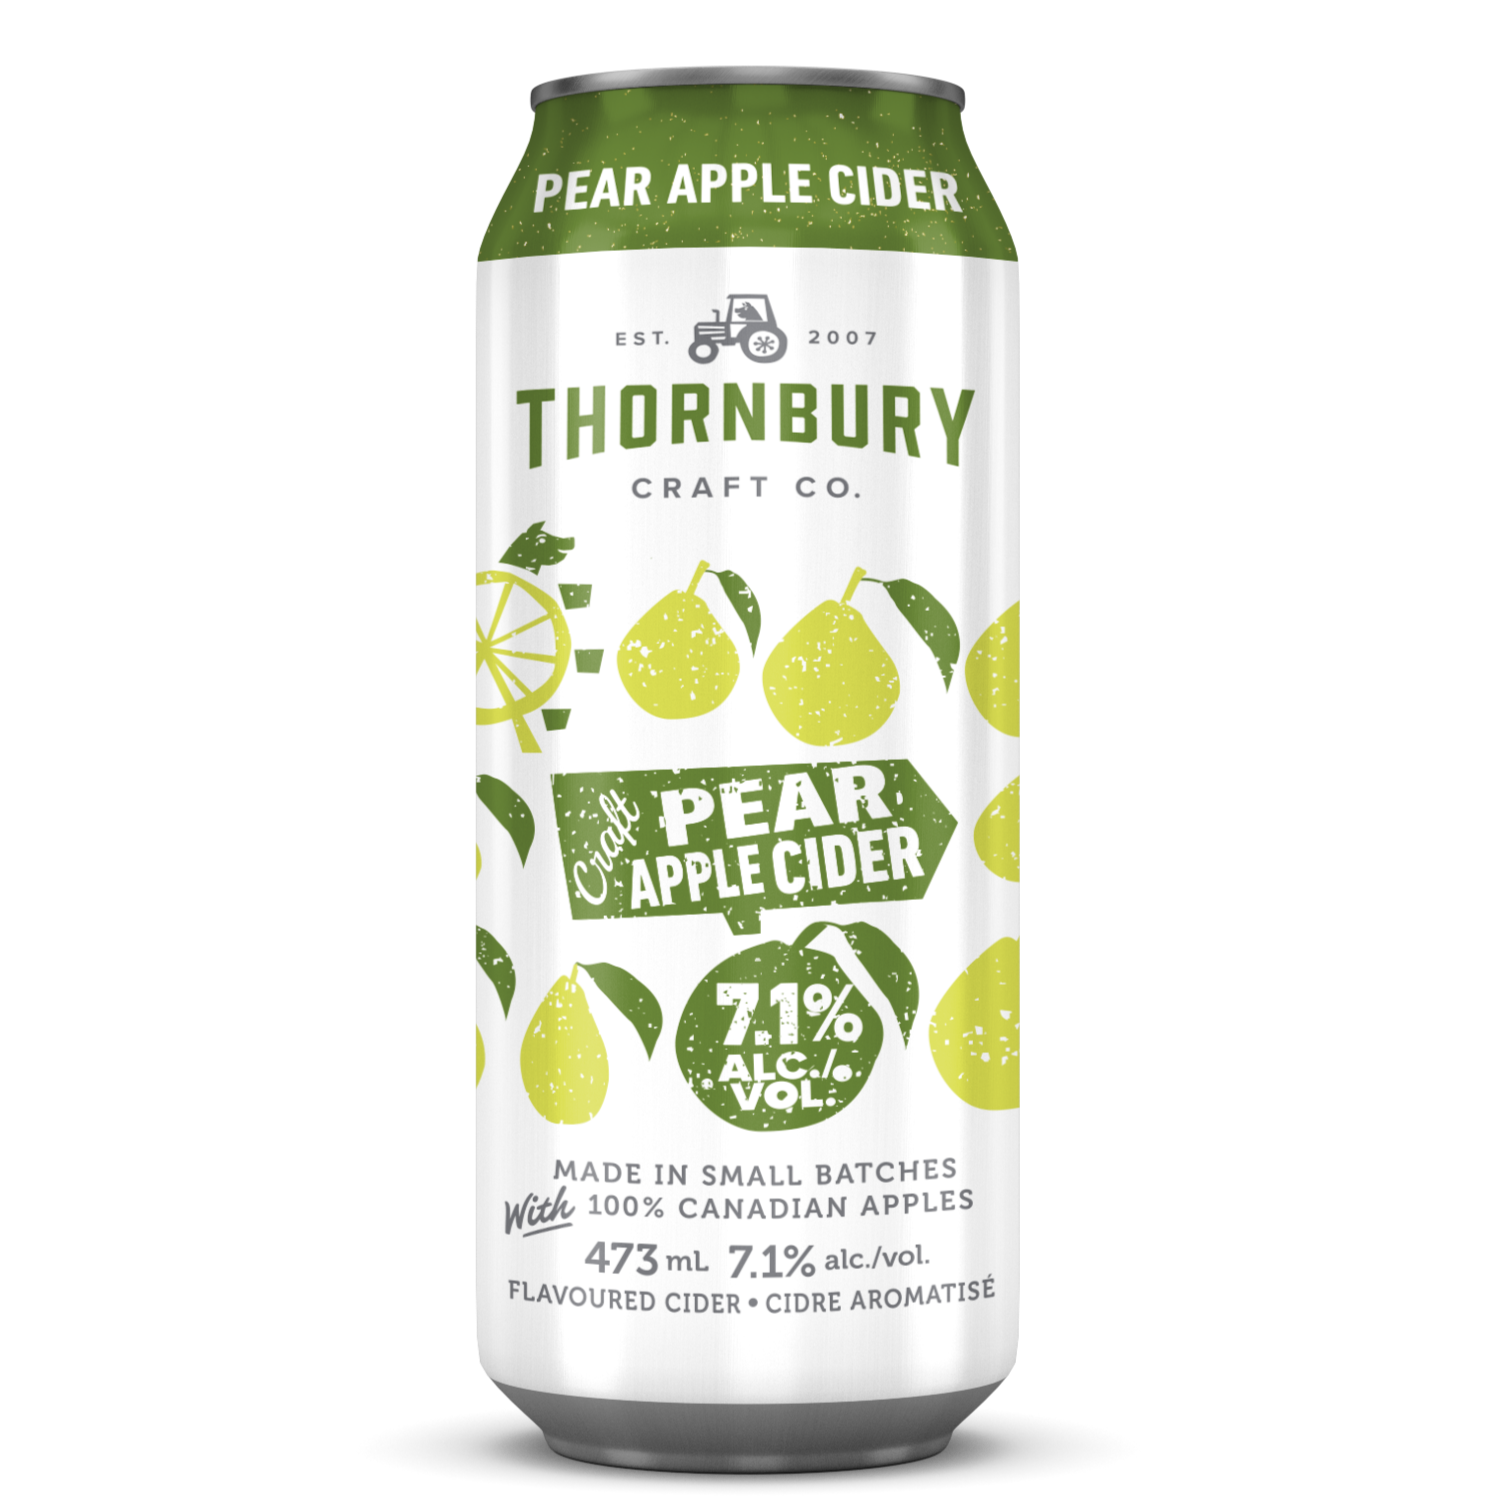 Thornbury Pear Apple Cider